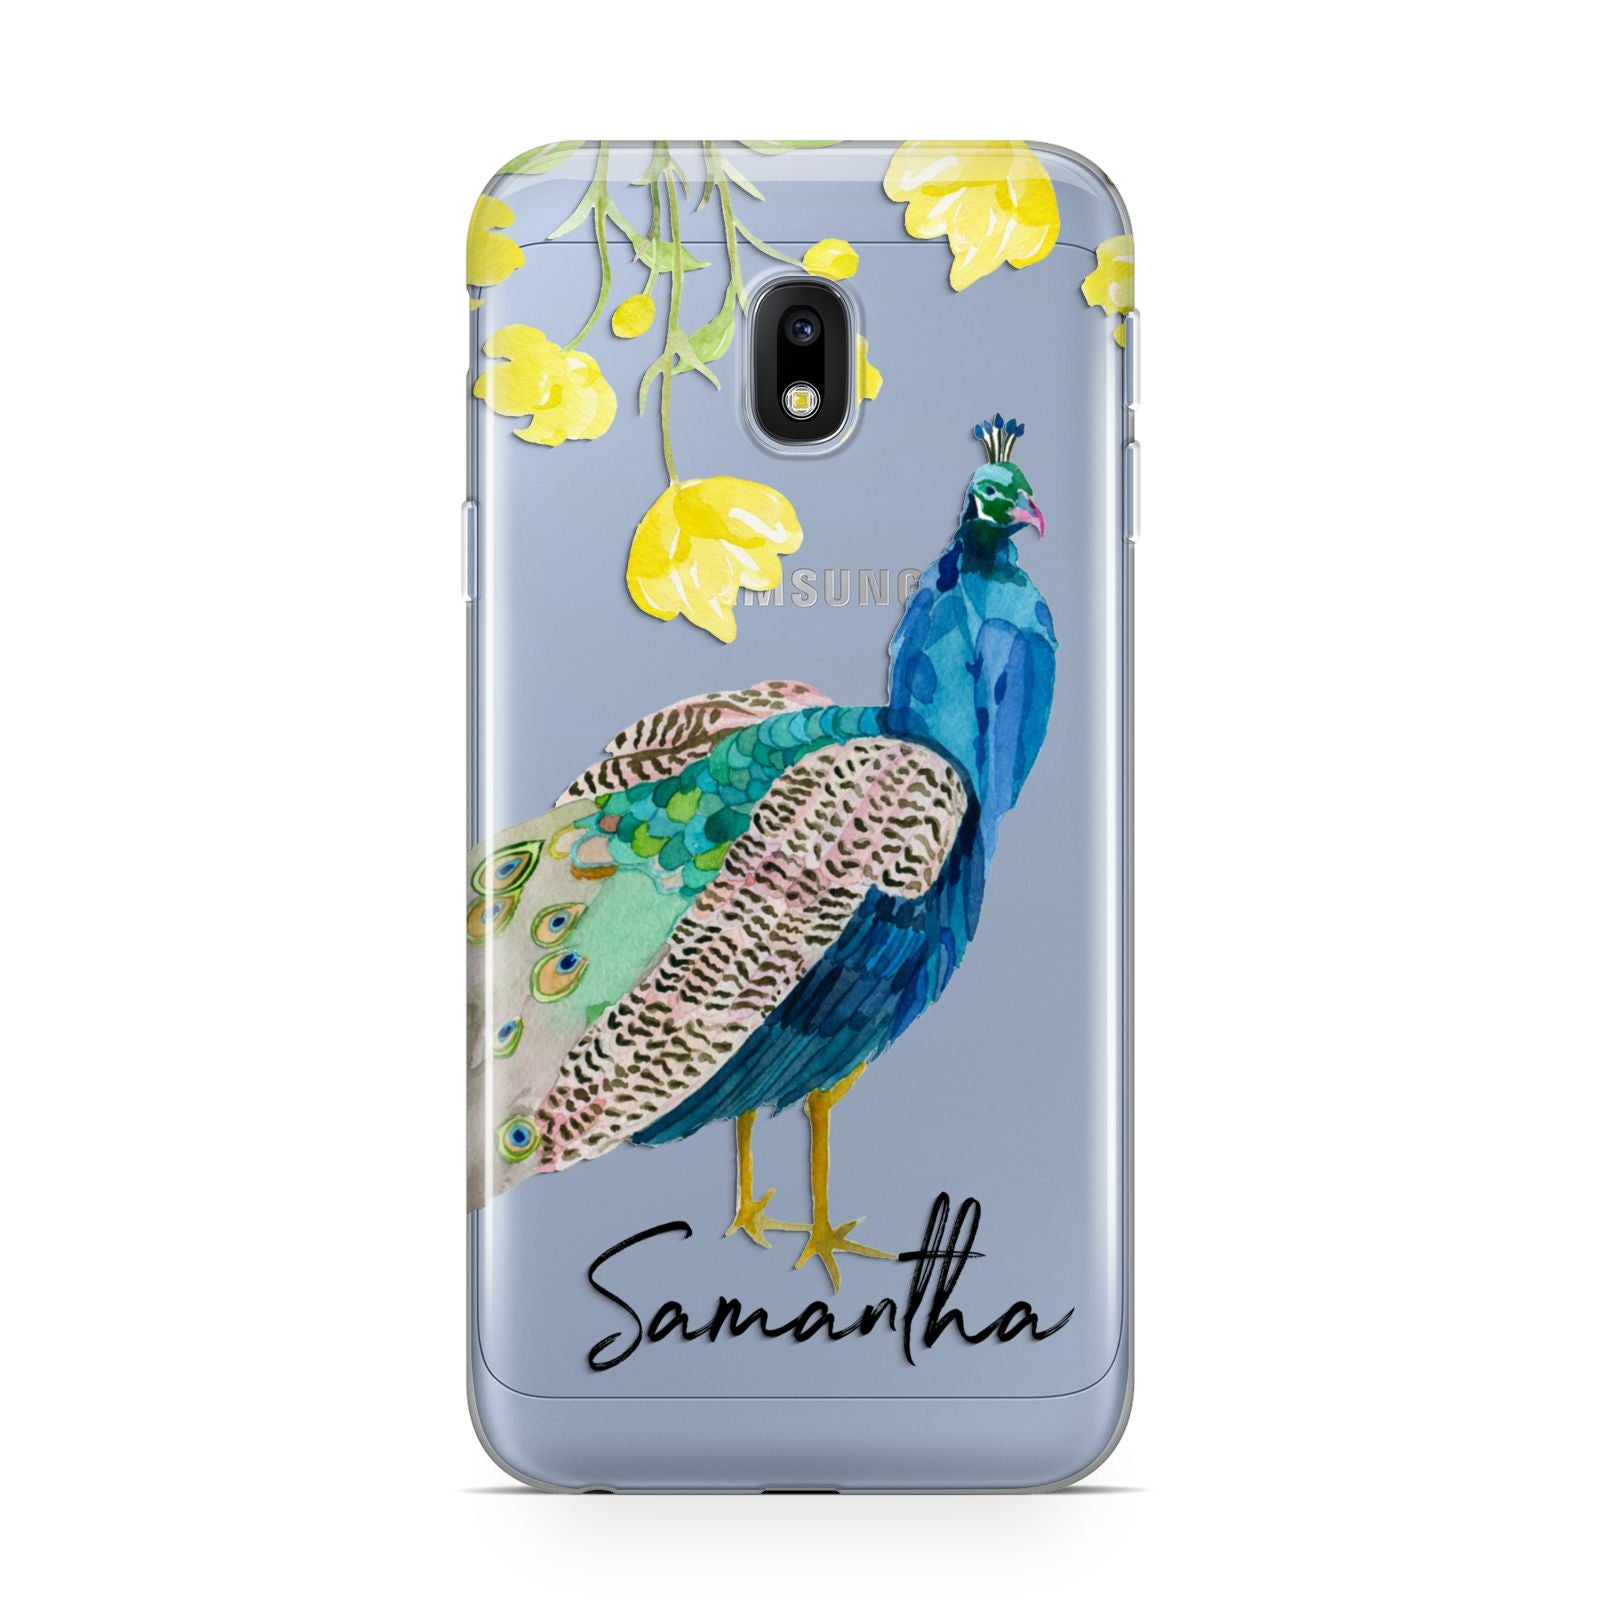 Personalised Peacock Samsung Galaxy J3 2017 Case